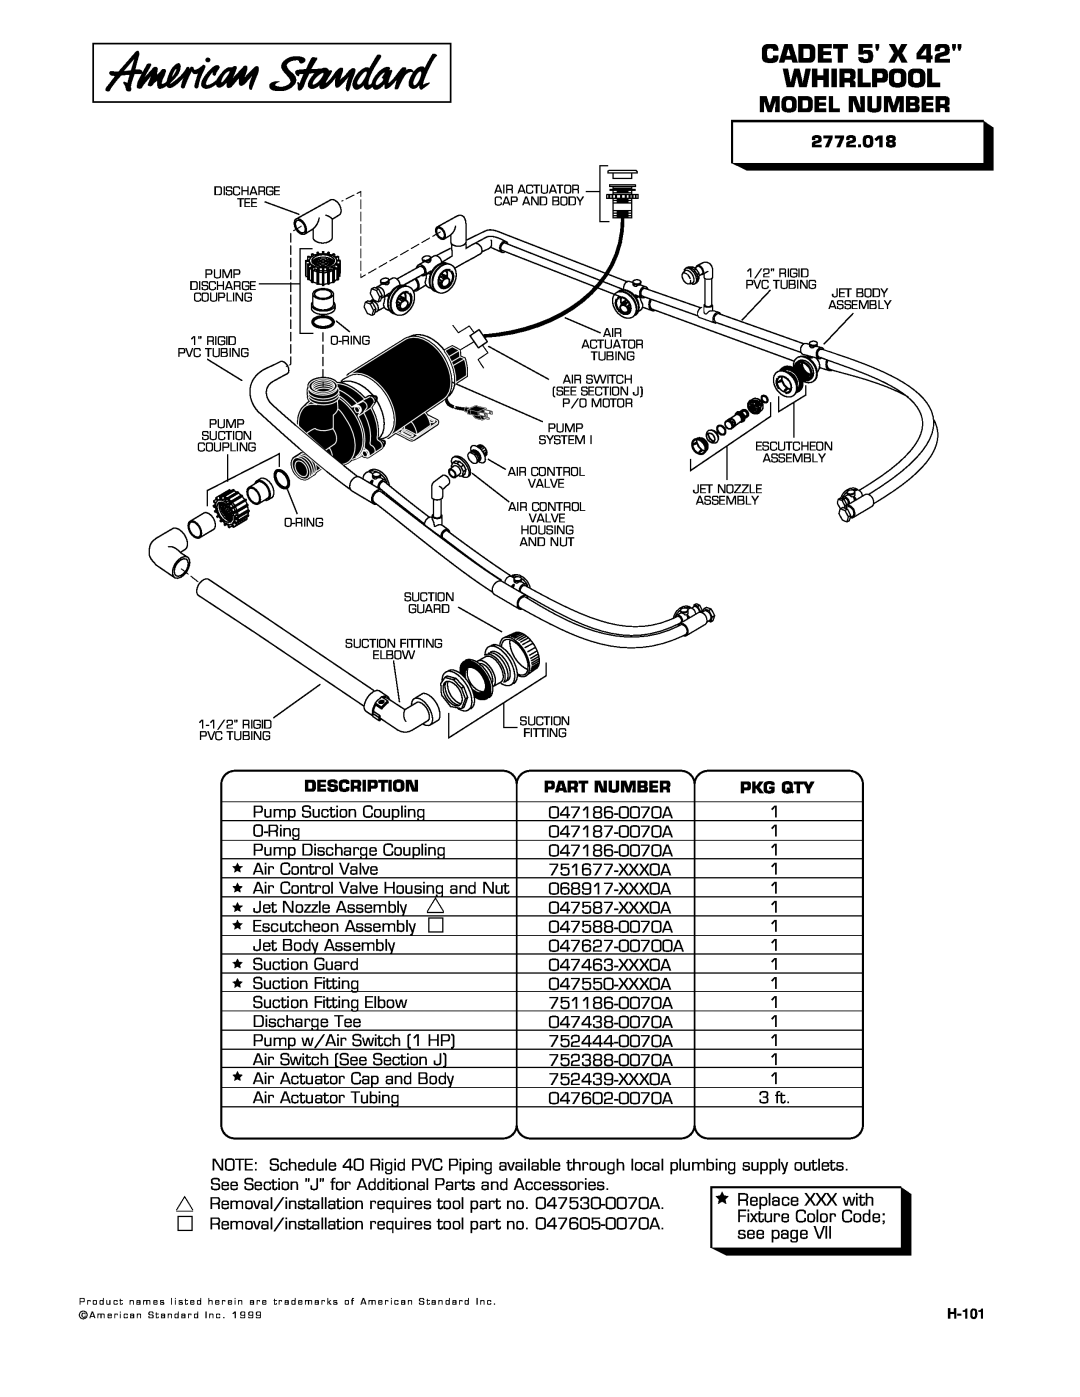 American Standard 751677-XXX0A manual CADET 5 X WHIRLPOOL, Model Number, 2772.018, Description, Part Number, Pkg Qty 